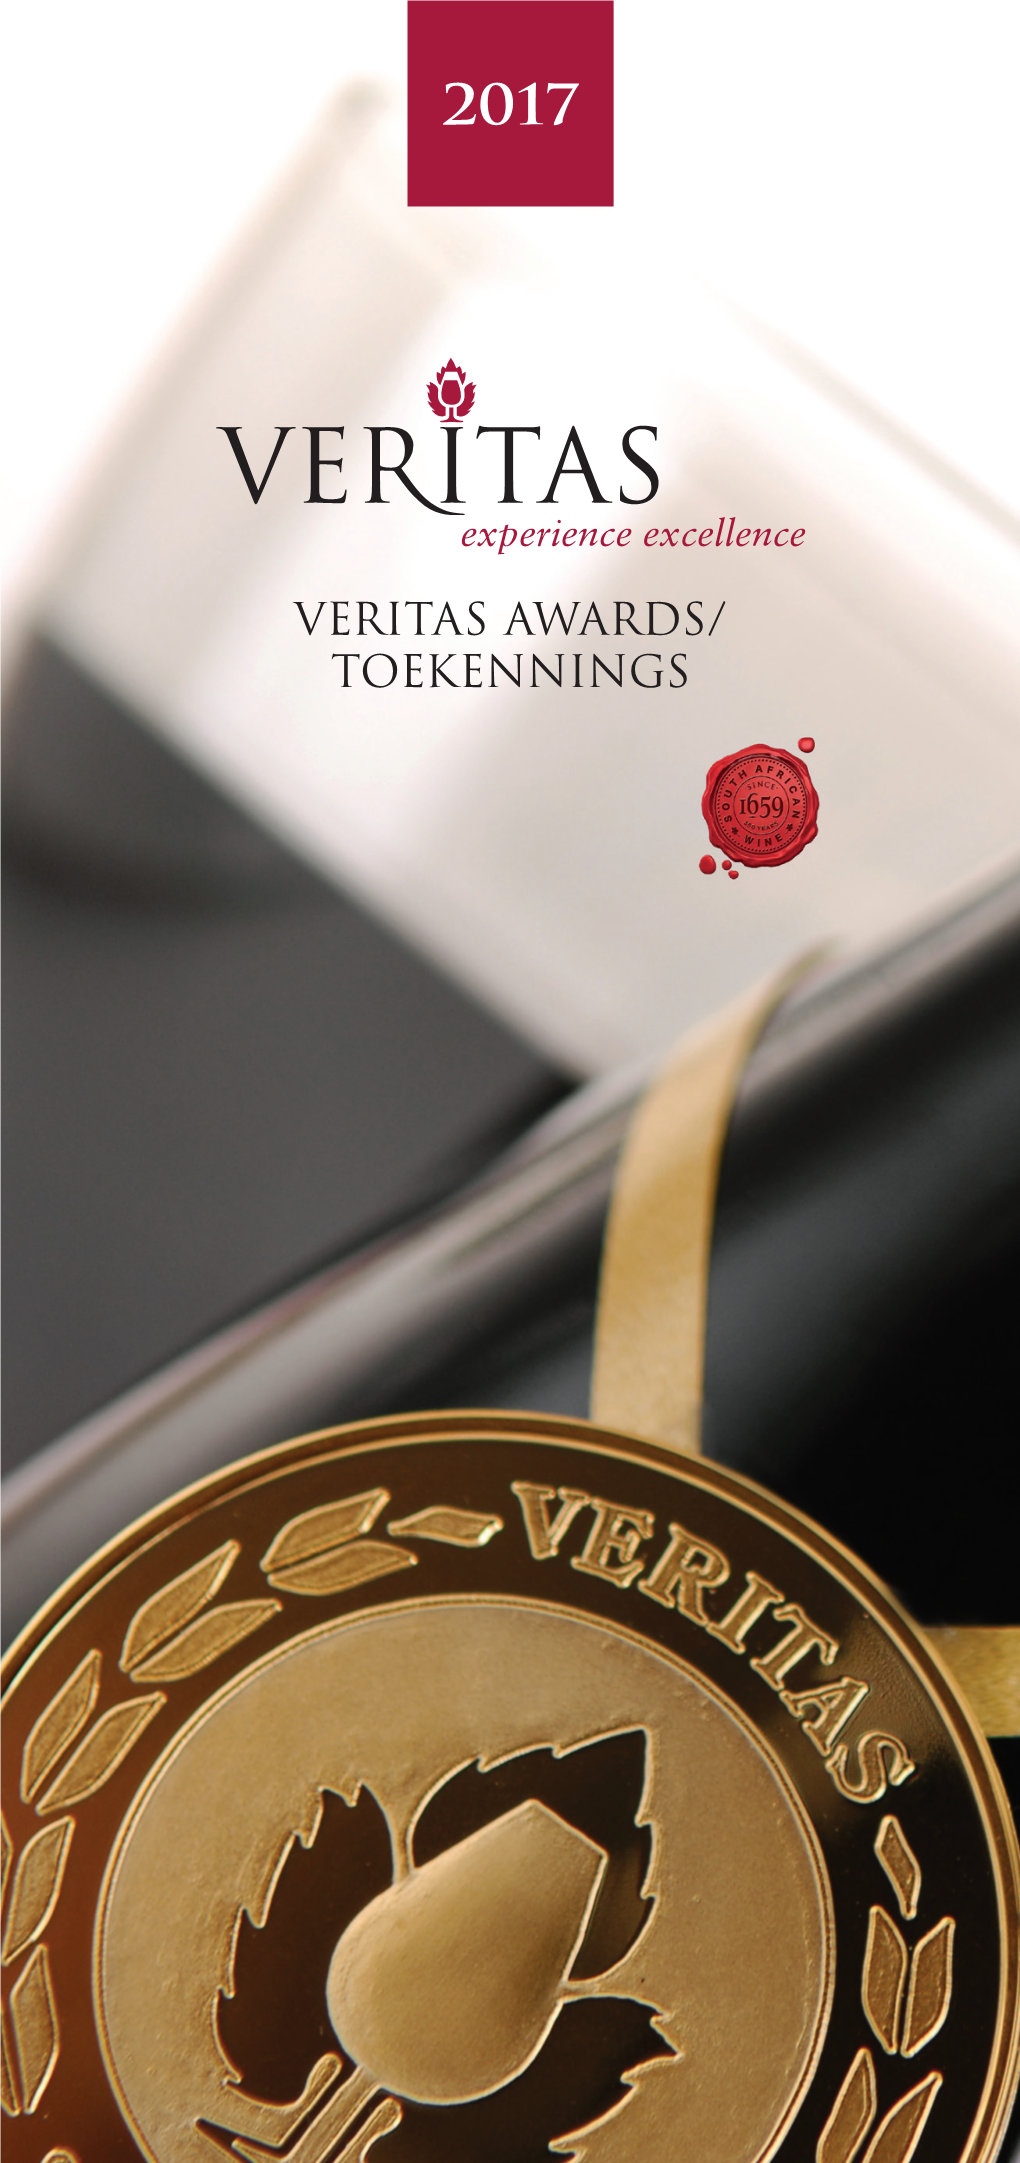 VERITAS AWARDS/ TOEKENNINGS 46677 Veritas B Innercov V3.Pdf 1 29/09/2015 14:17 SAL&CTP VERITAS FRONT INSIDE COVER AD-F.Pdf 1 2016/07/19 2:07 PM